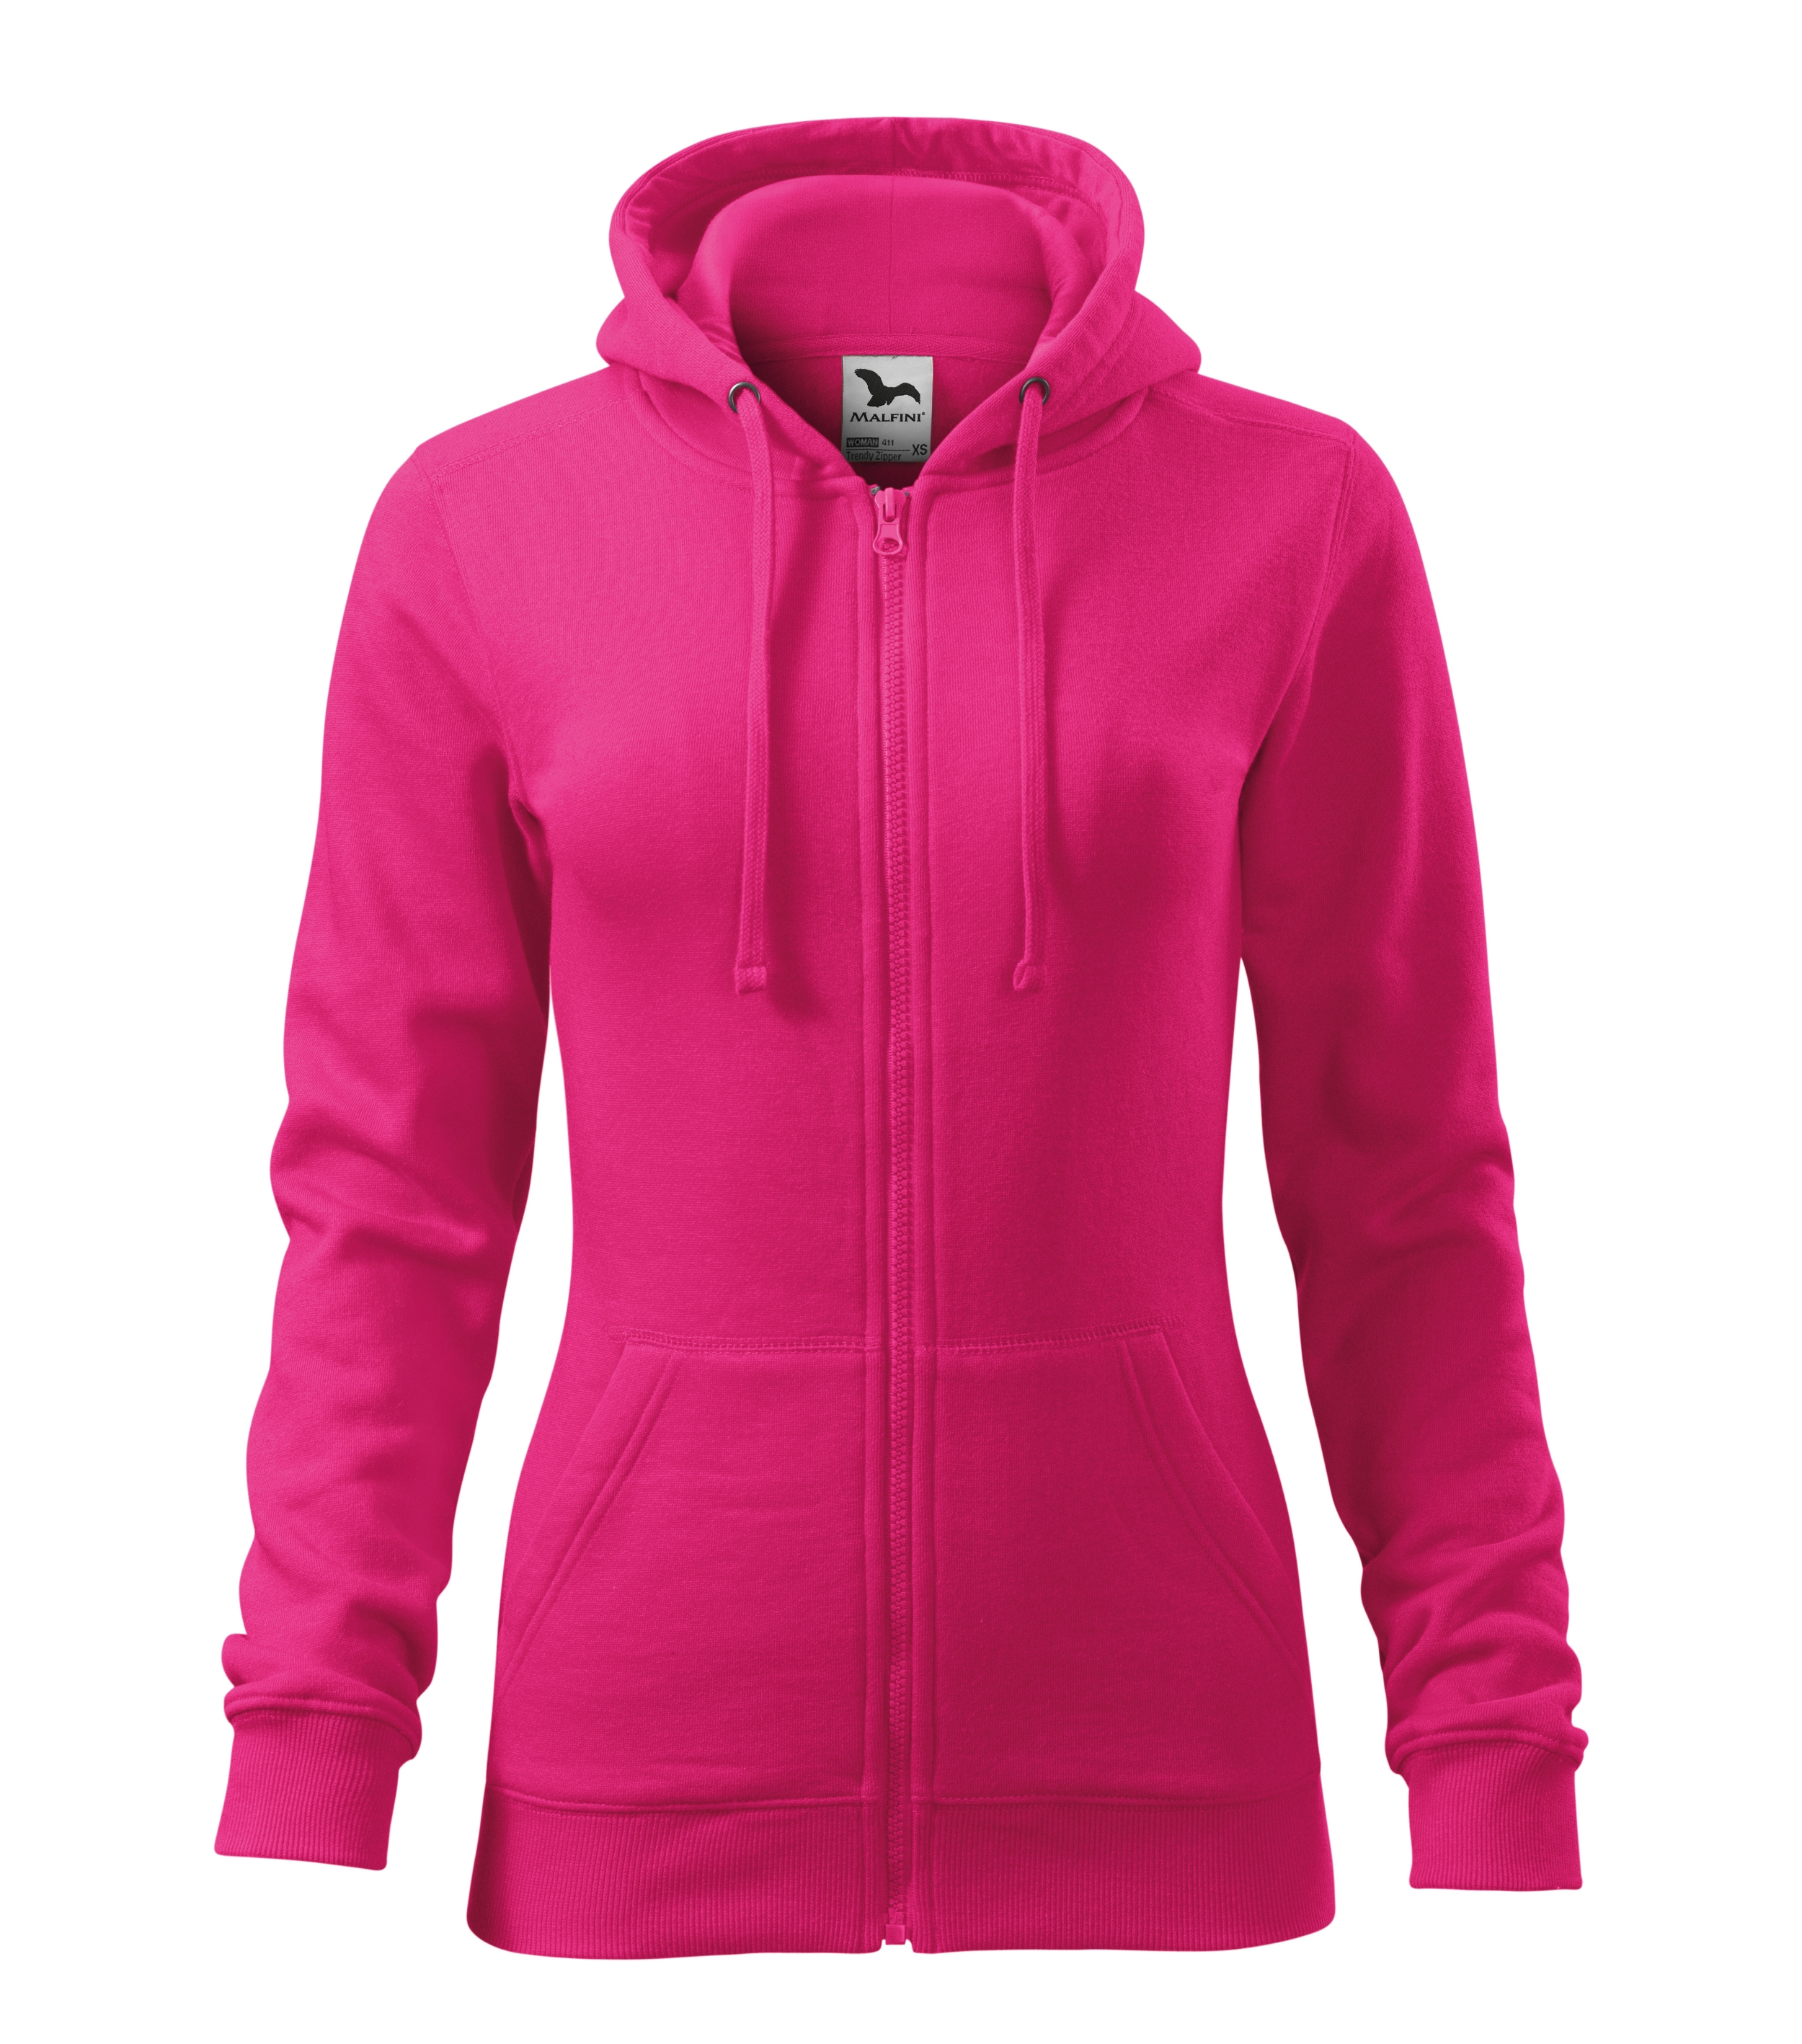 Trendy Zipper 411 Sweatshirt Damen Jacke Sweatshirts für Bekleidung Sweatjacke Kapuzenjacke Übergangsjacke